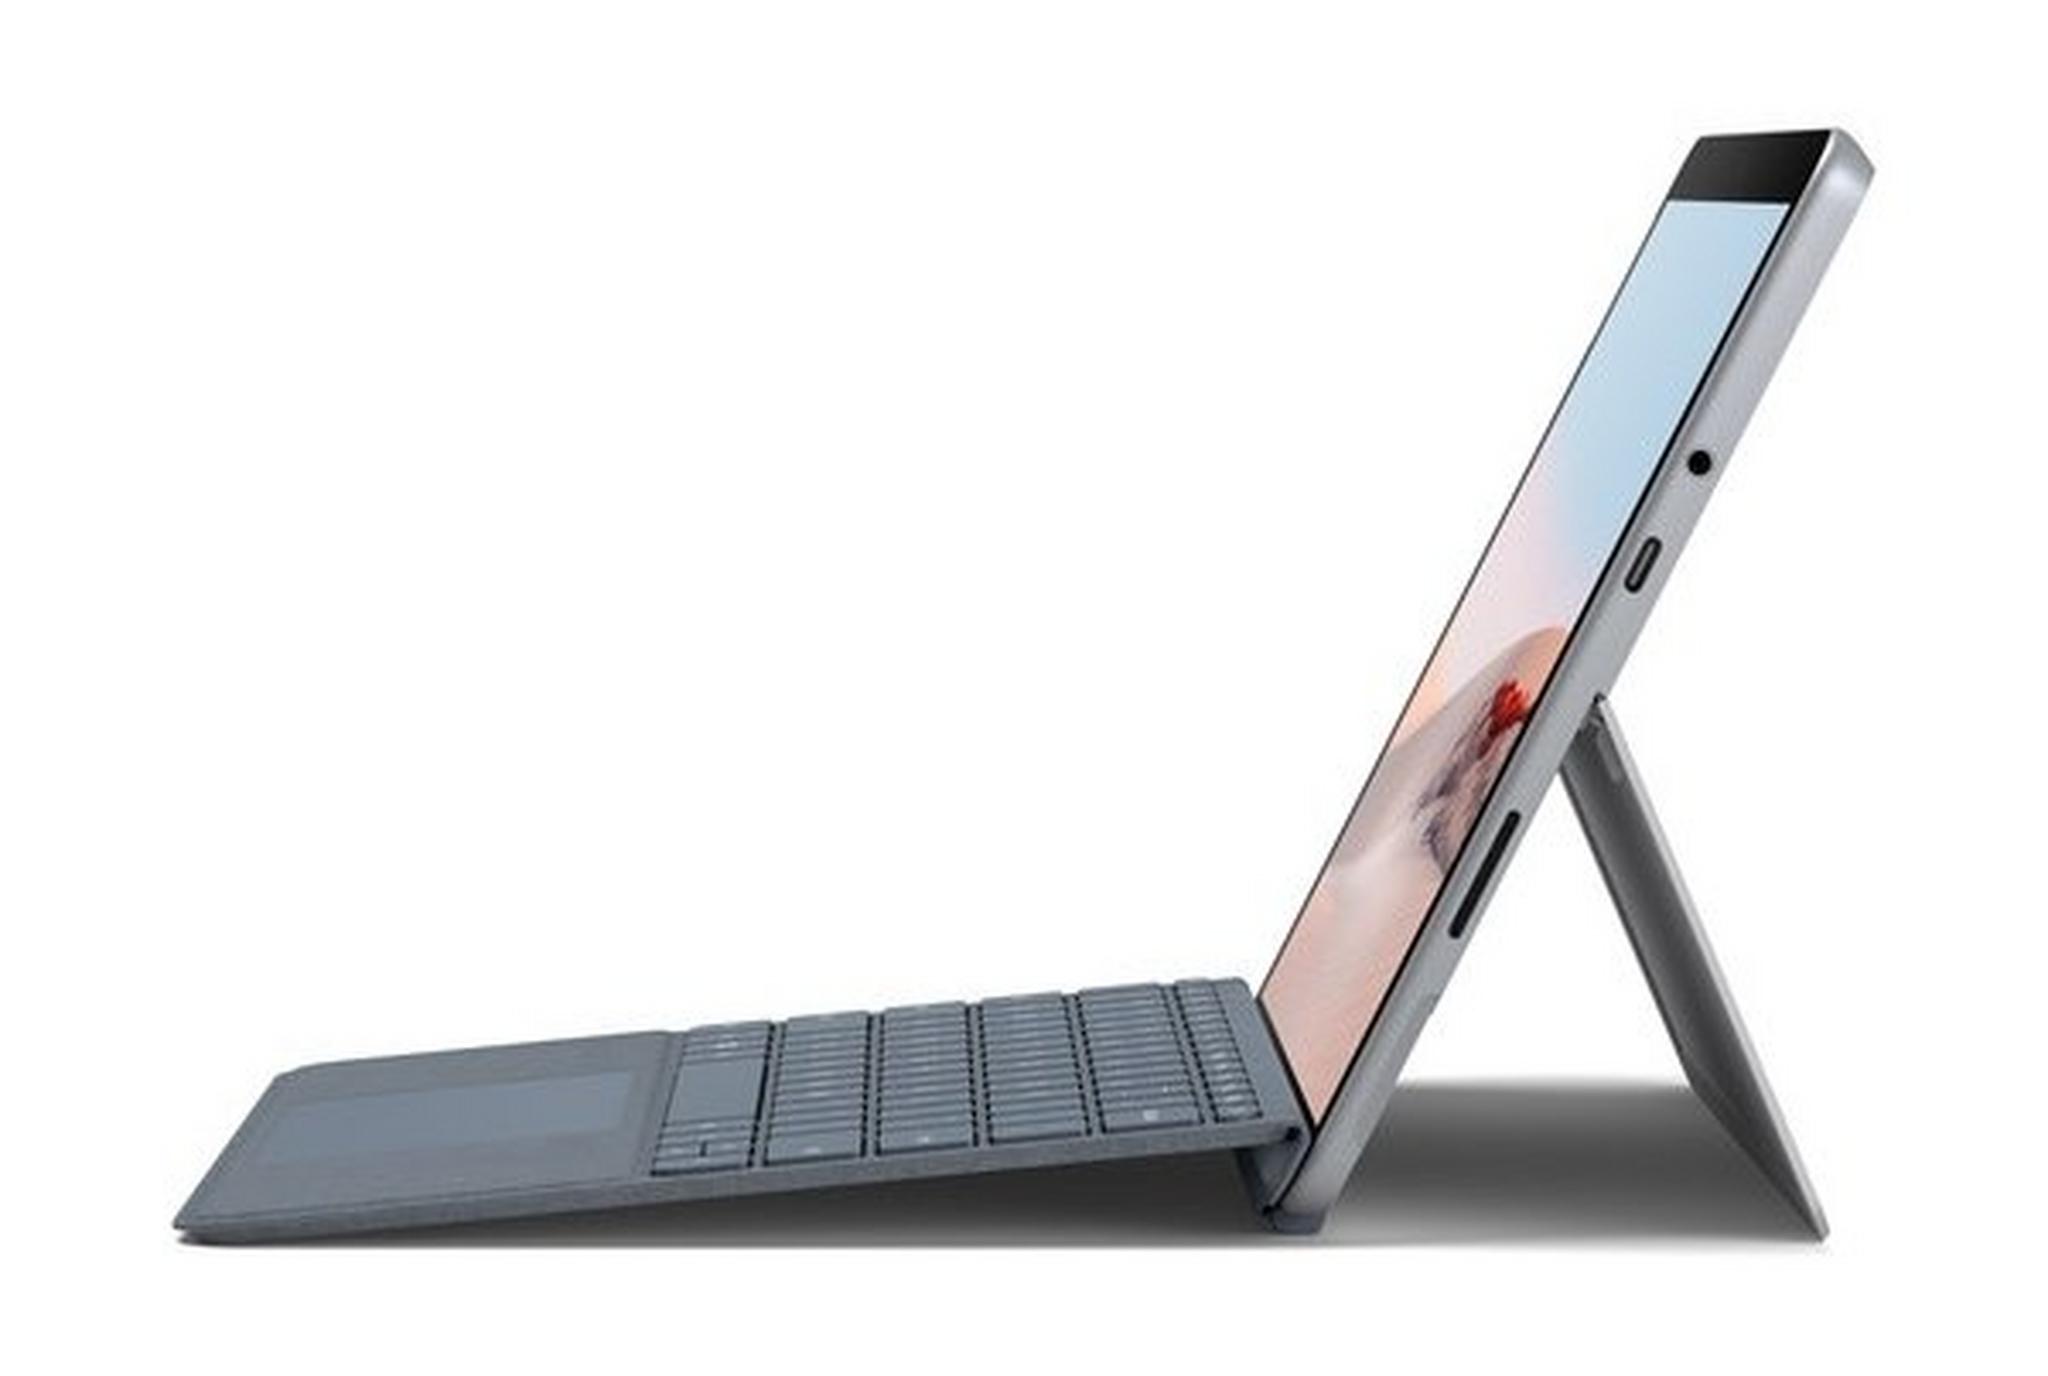 Microsoft Surface Go Intel Pentium 8GB RAM 128GB SSD 10" Convertible Laptop - Platinum